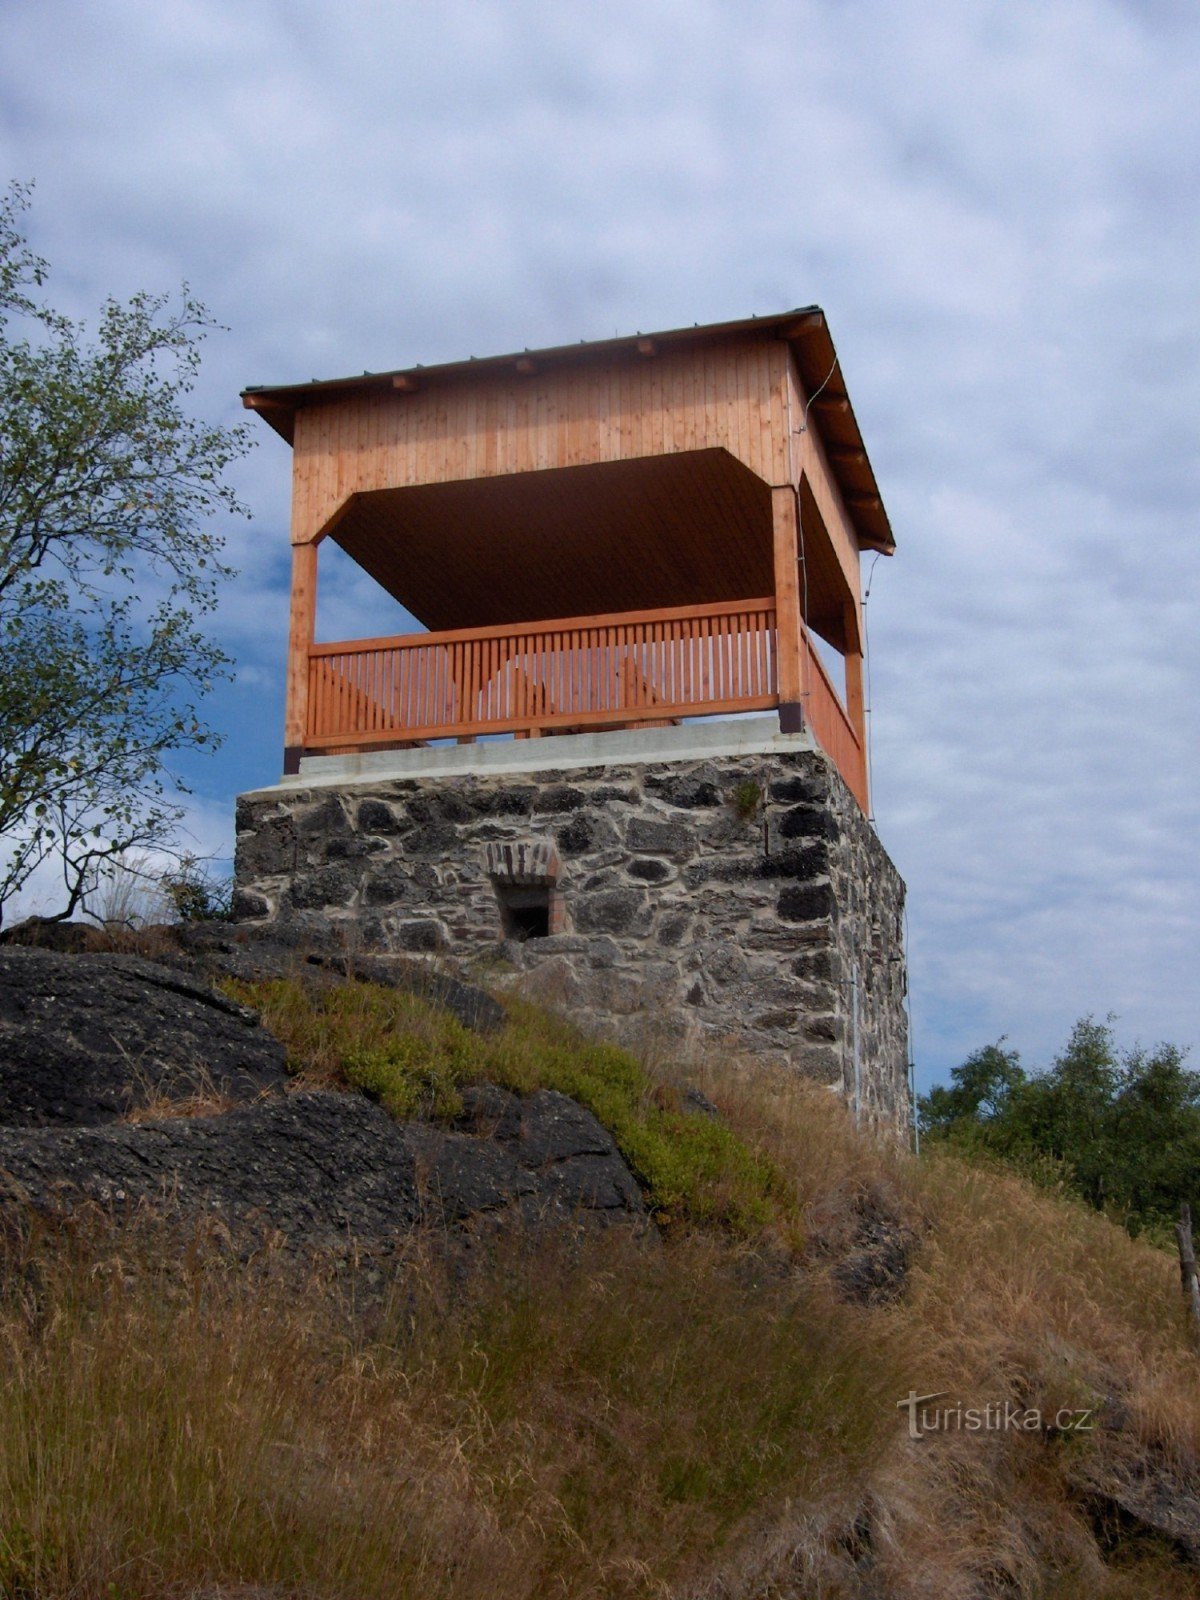 Jeřabina lookout tower